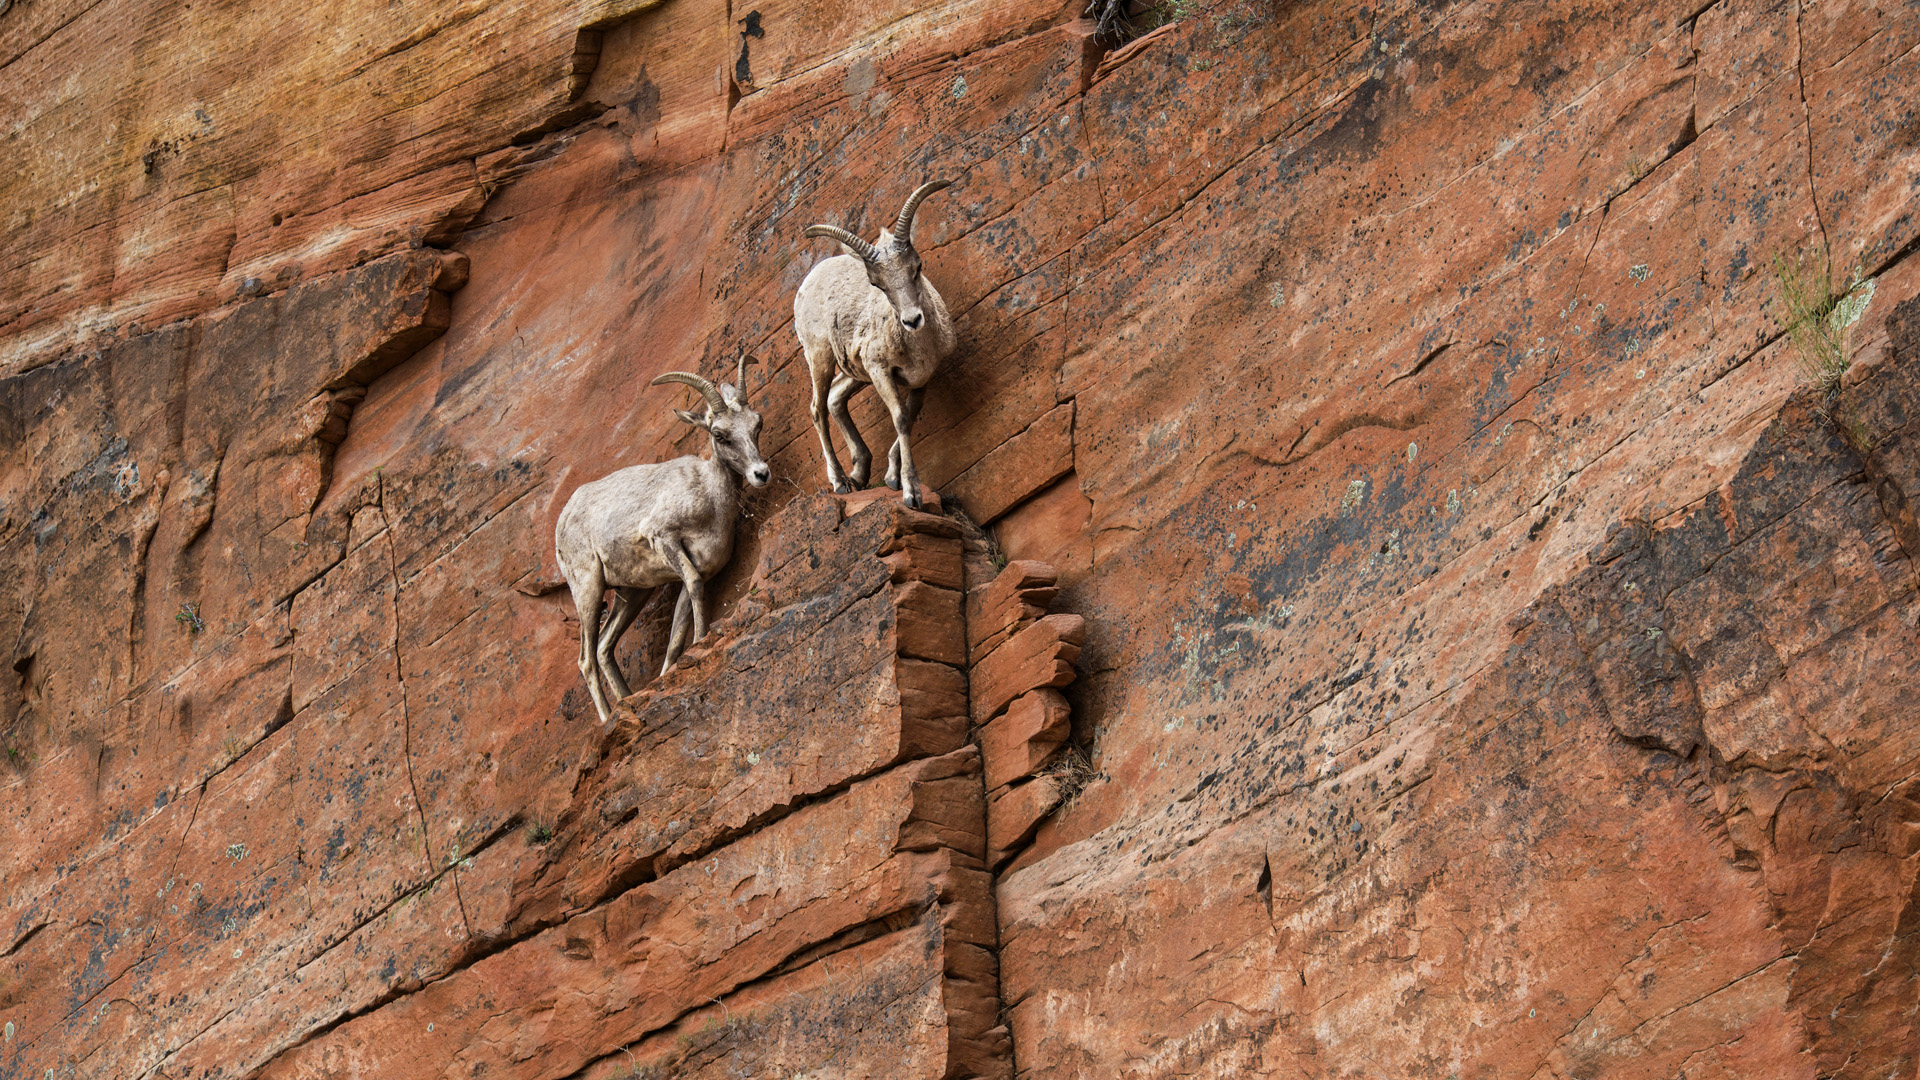 General 1920x1080 rocks ibex rock climbing rock formation canyon Zion National Park Utah USA mammals